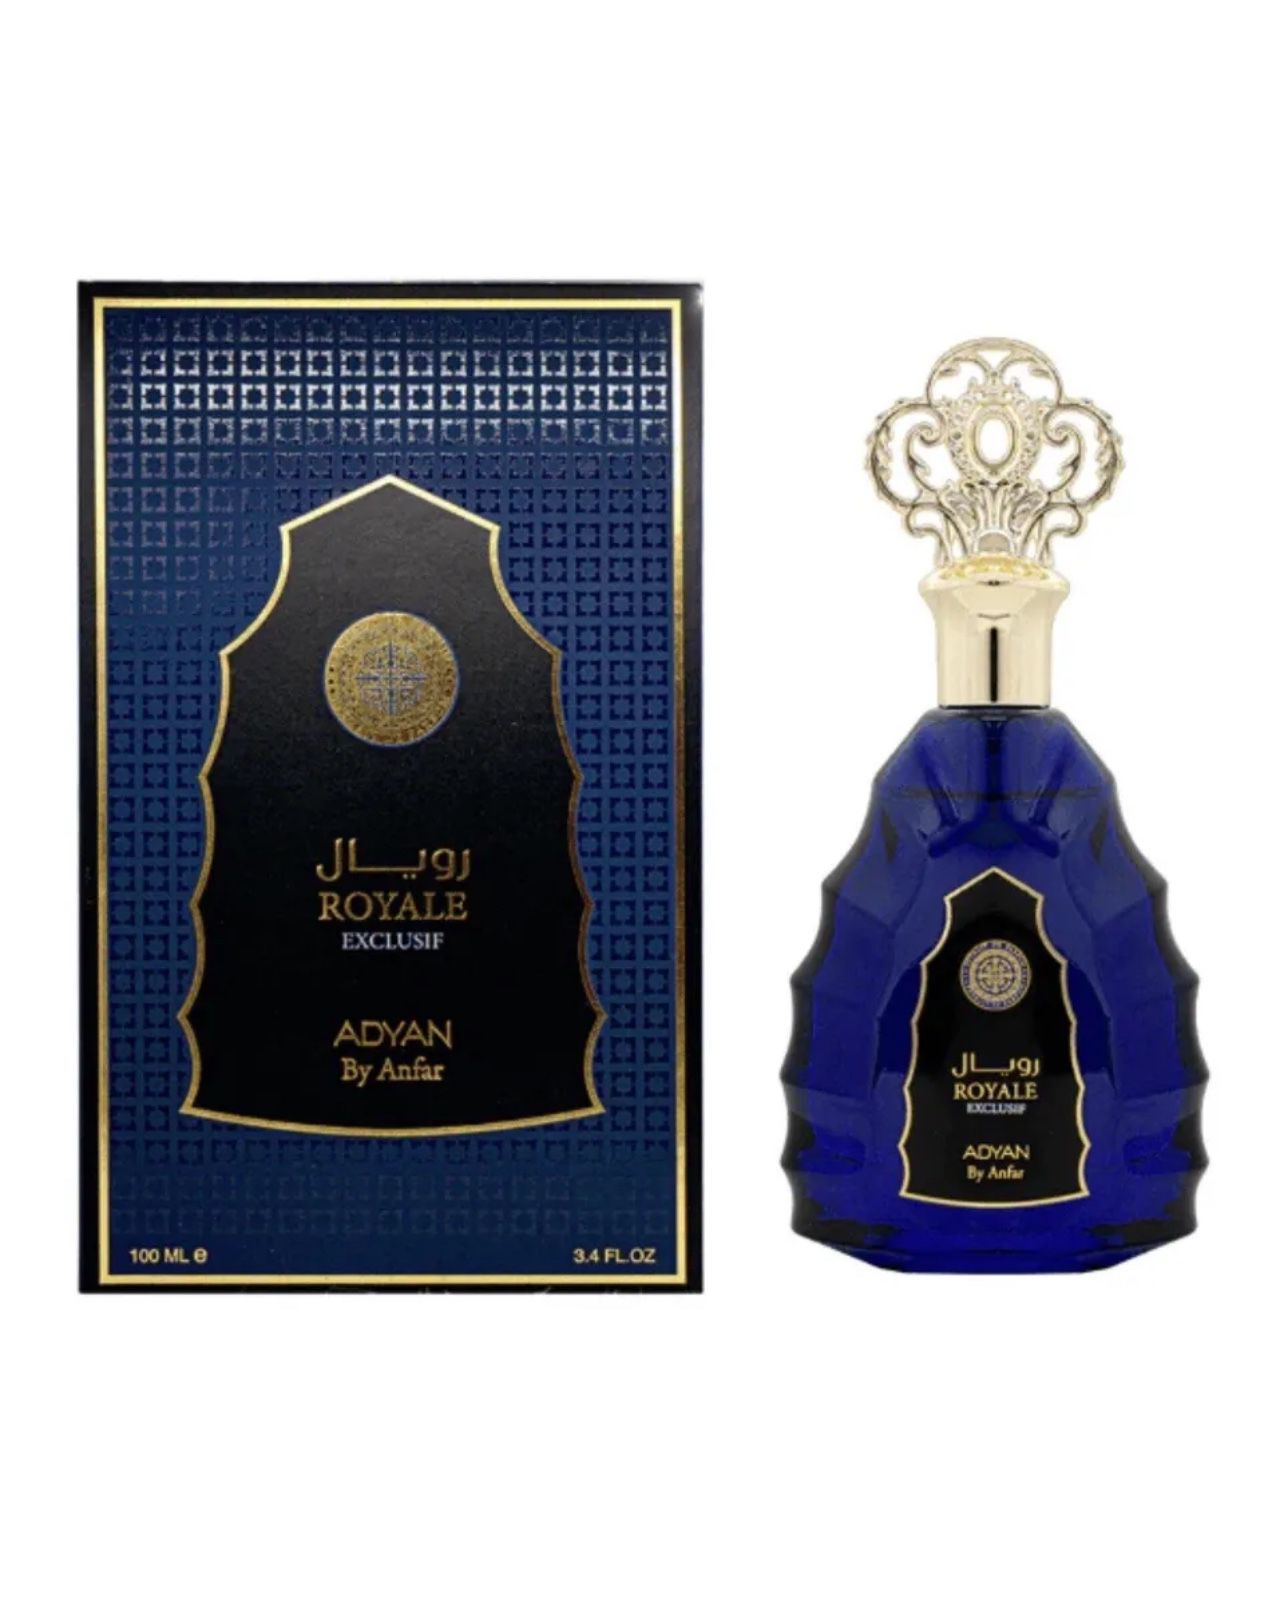 Royale Exclusif EDP Perfume By Adyan 100 ML🥇Rich Niche Fragrance🥇(Pheromones)